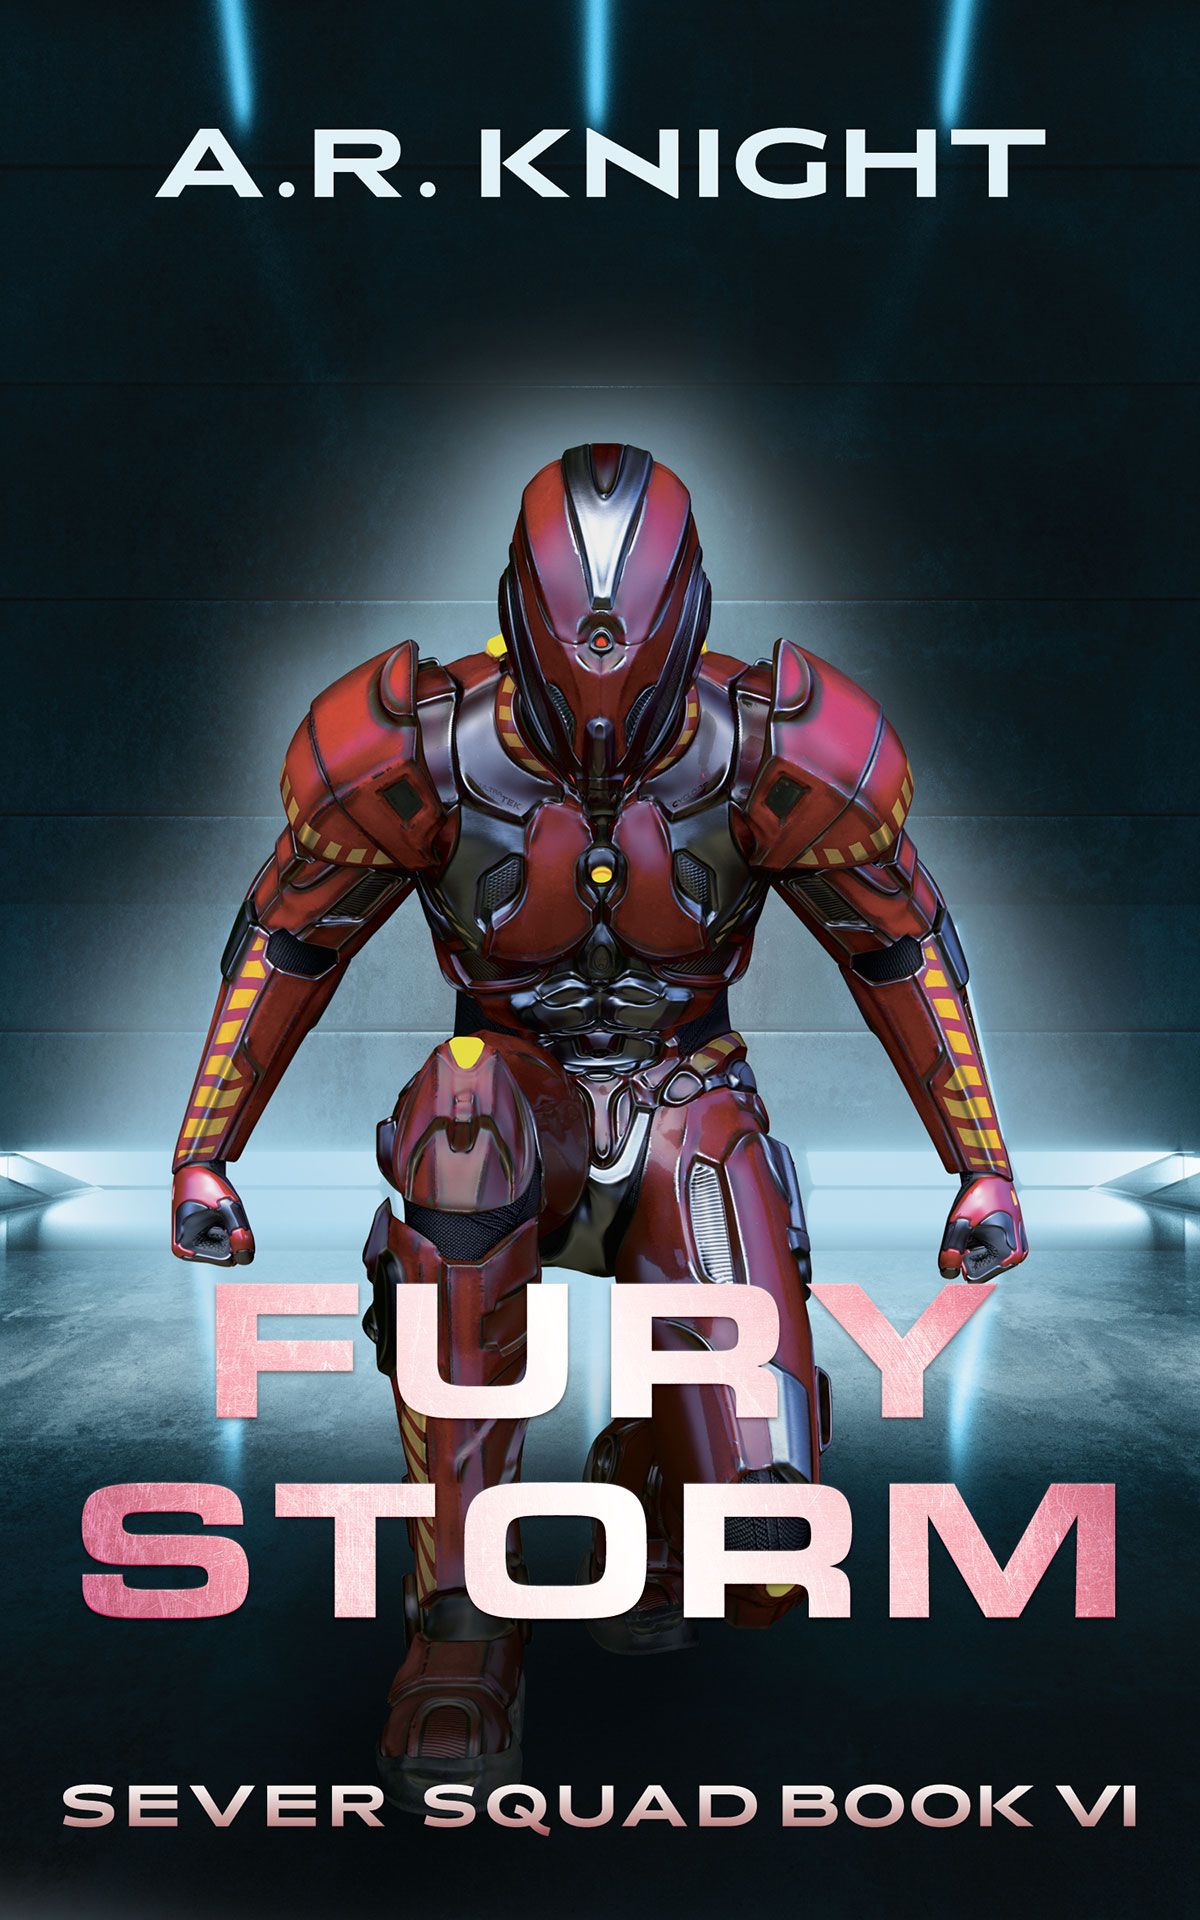 Fury Storm